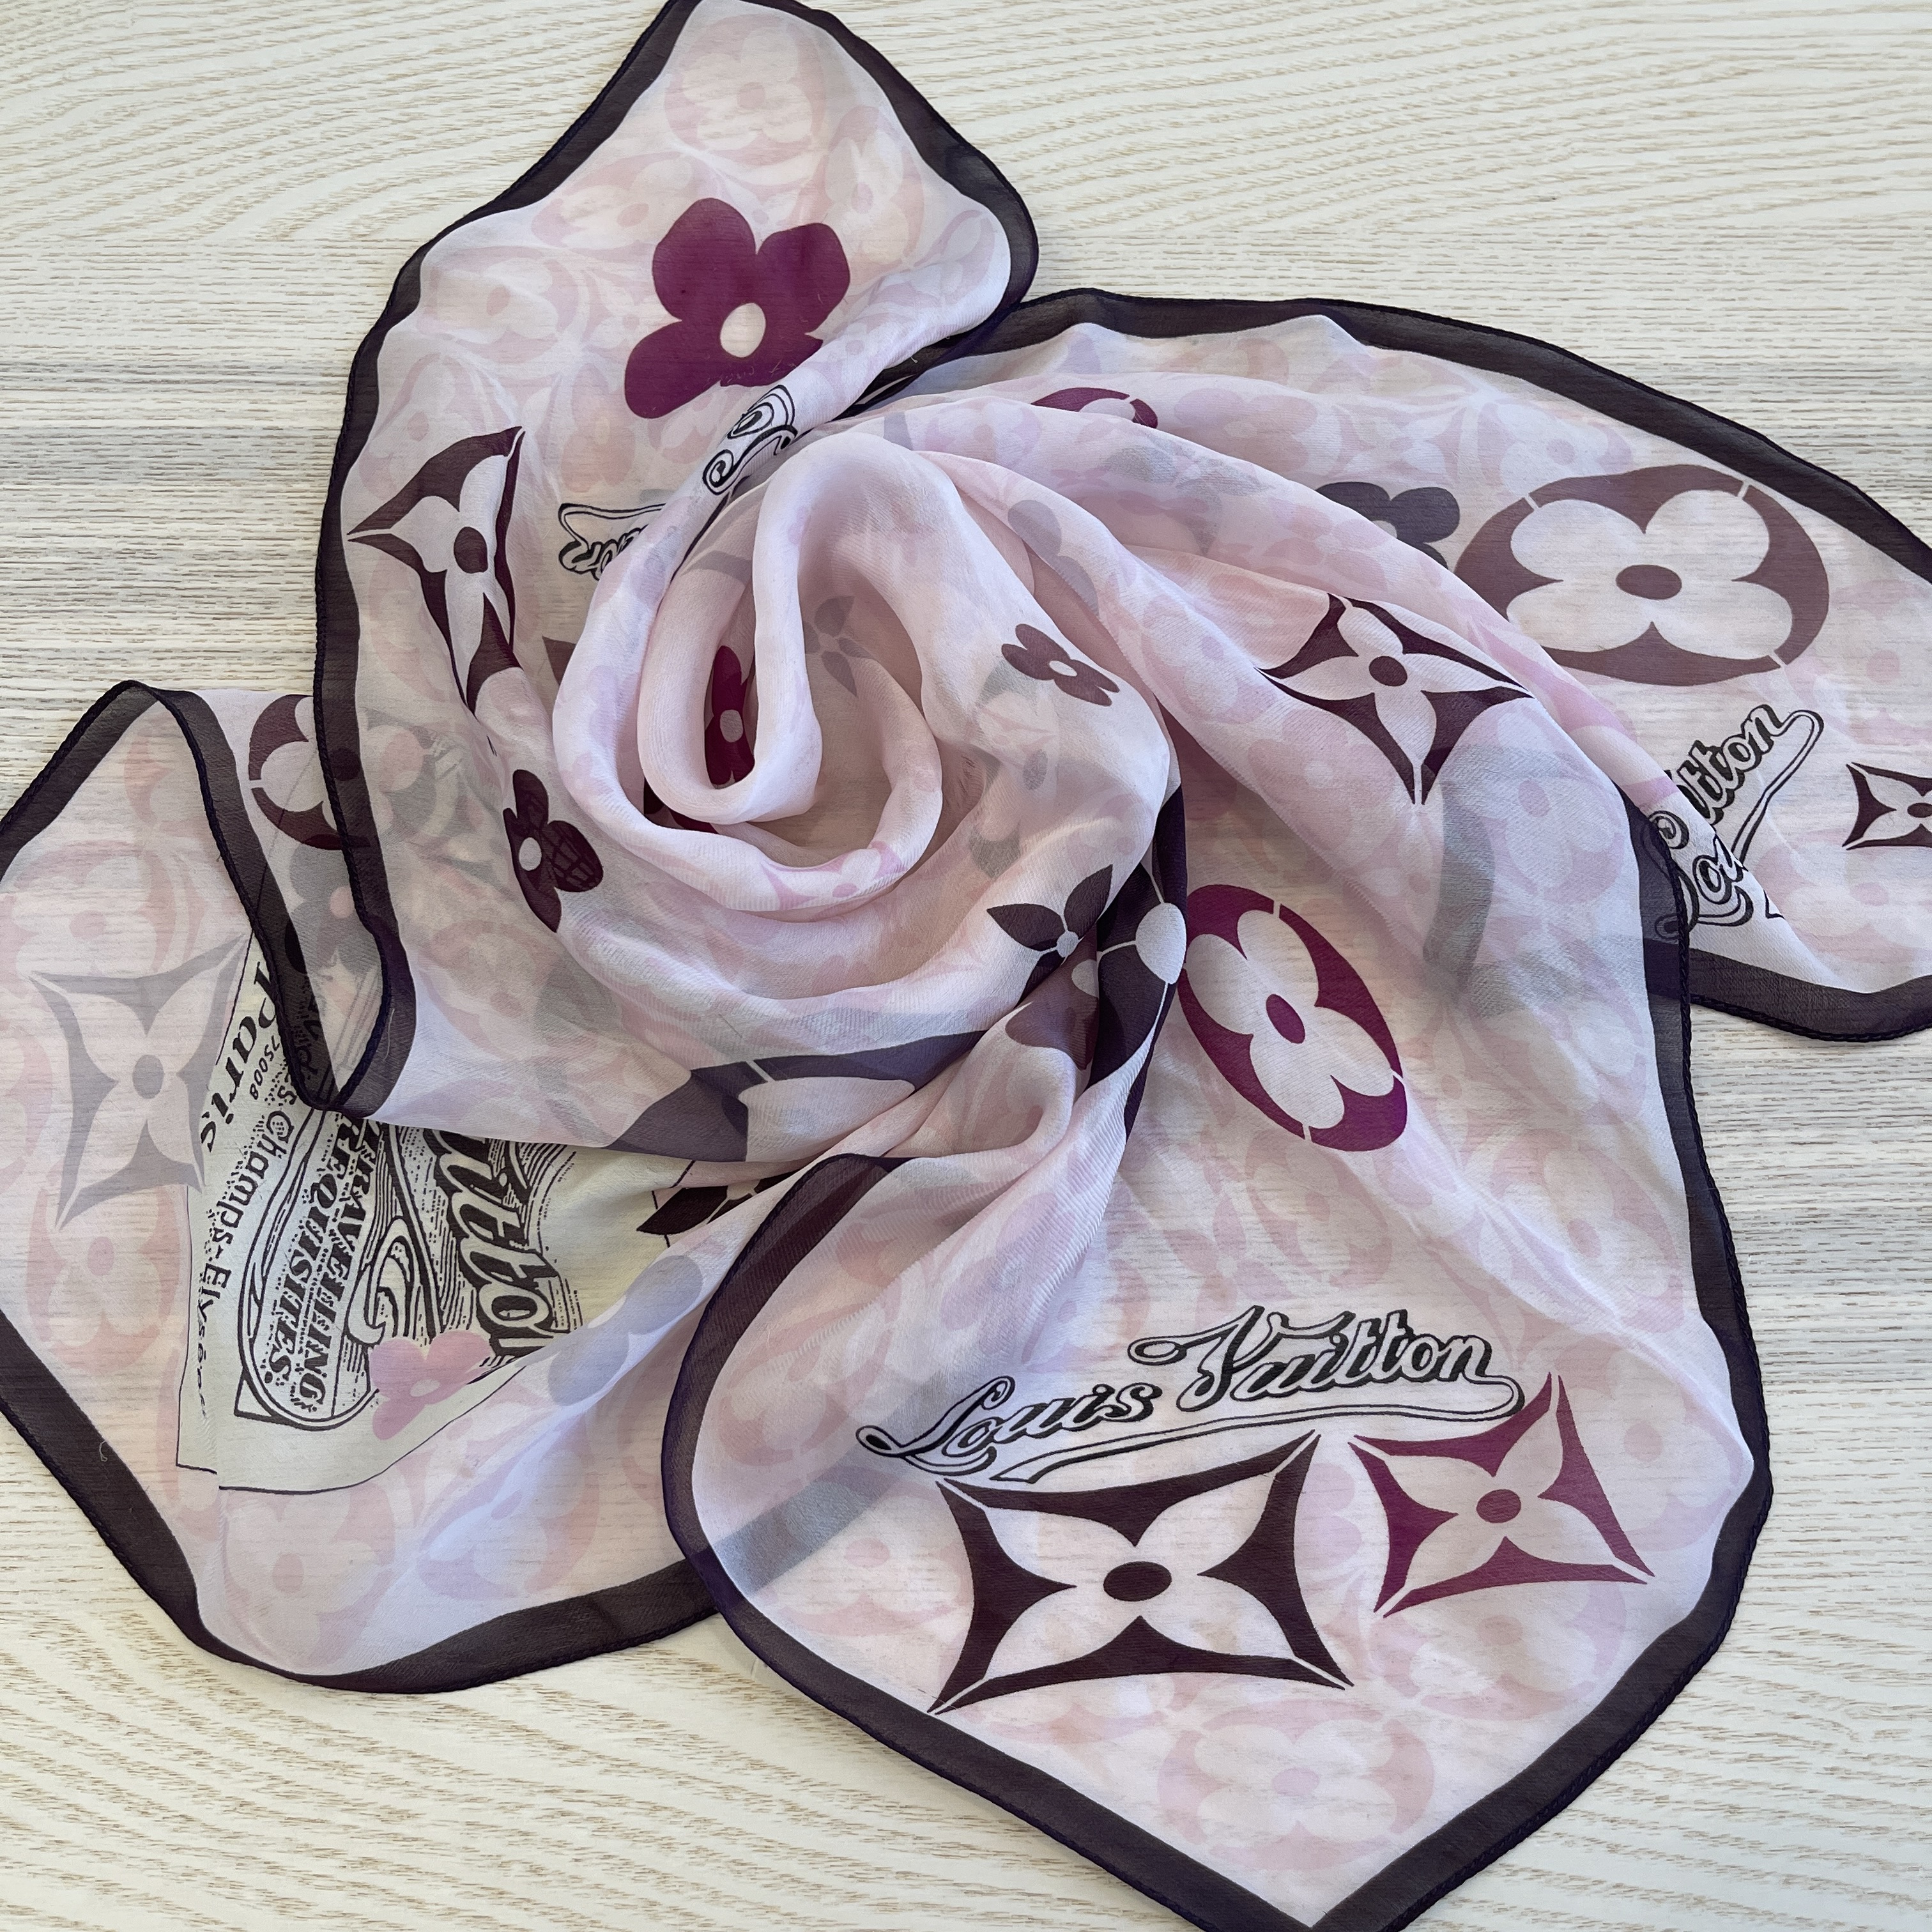 Authentic Louis Vuitton Monogram Flower Pattern Stole Scarf Silk